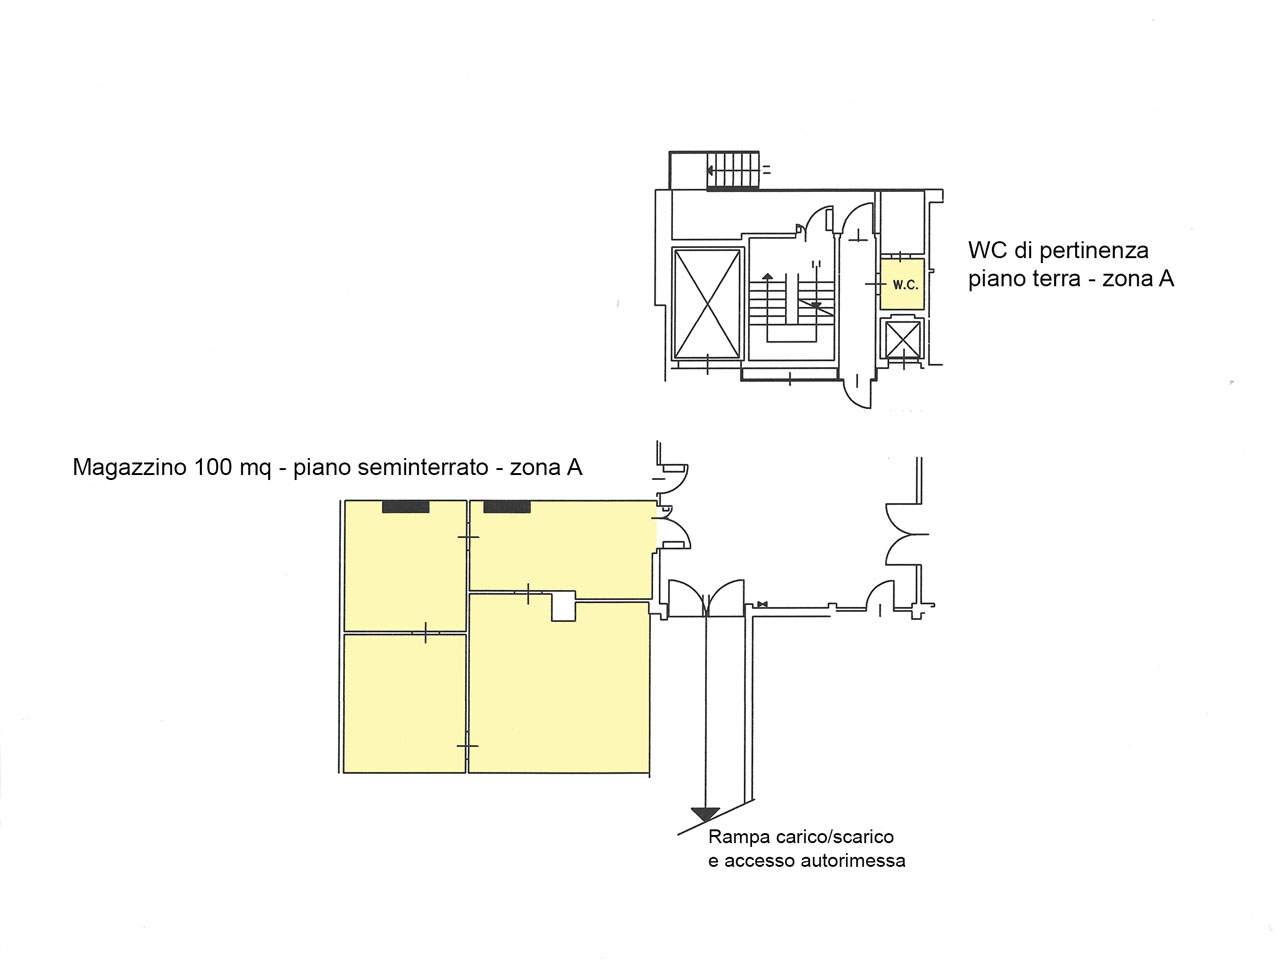 Floorplan - Warehouse for rent in Milan - 100 sqm (1076 sqft) - Atlantic Business Center